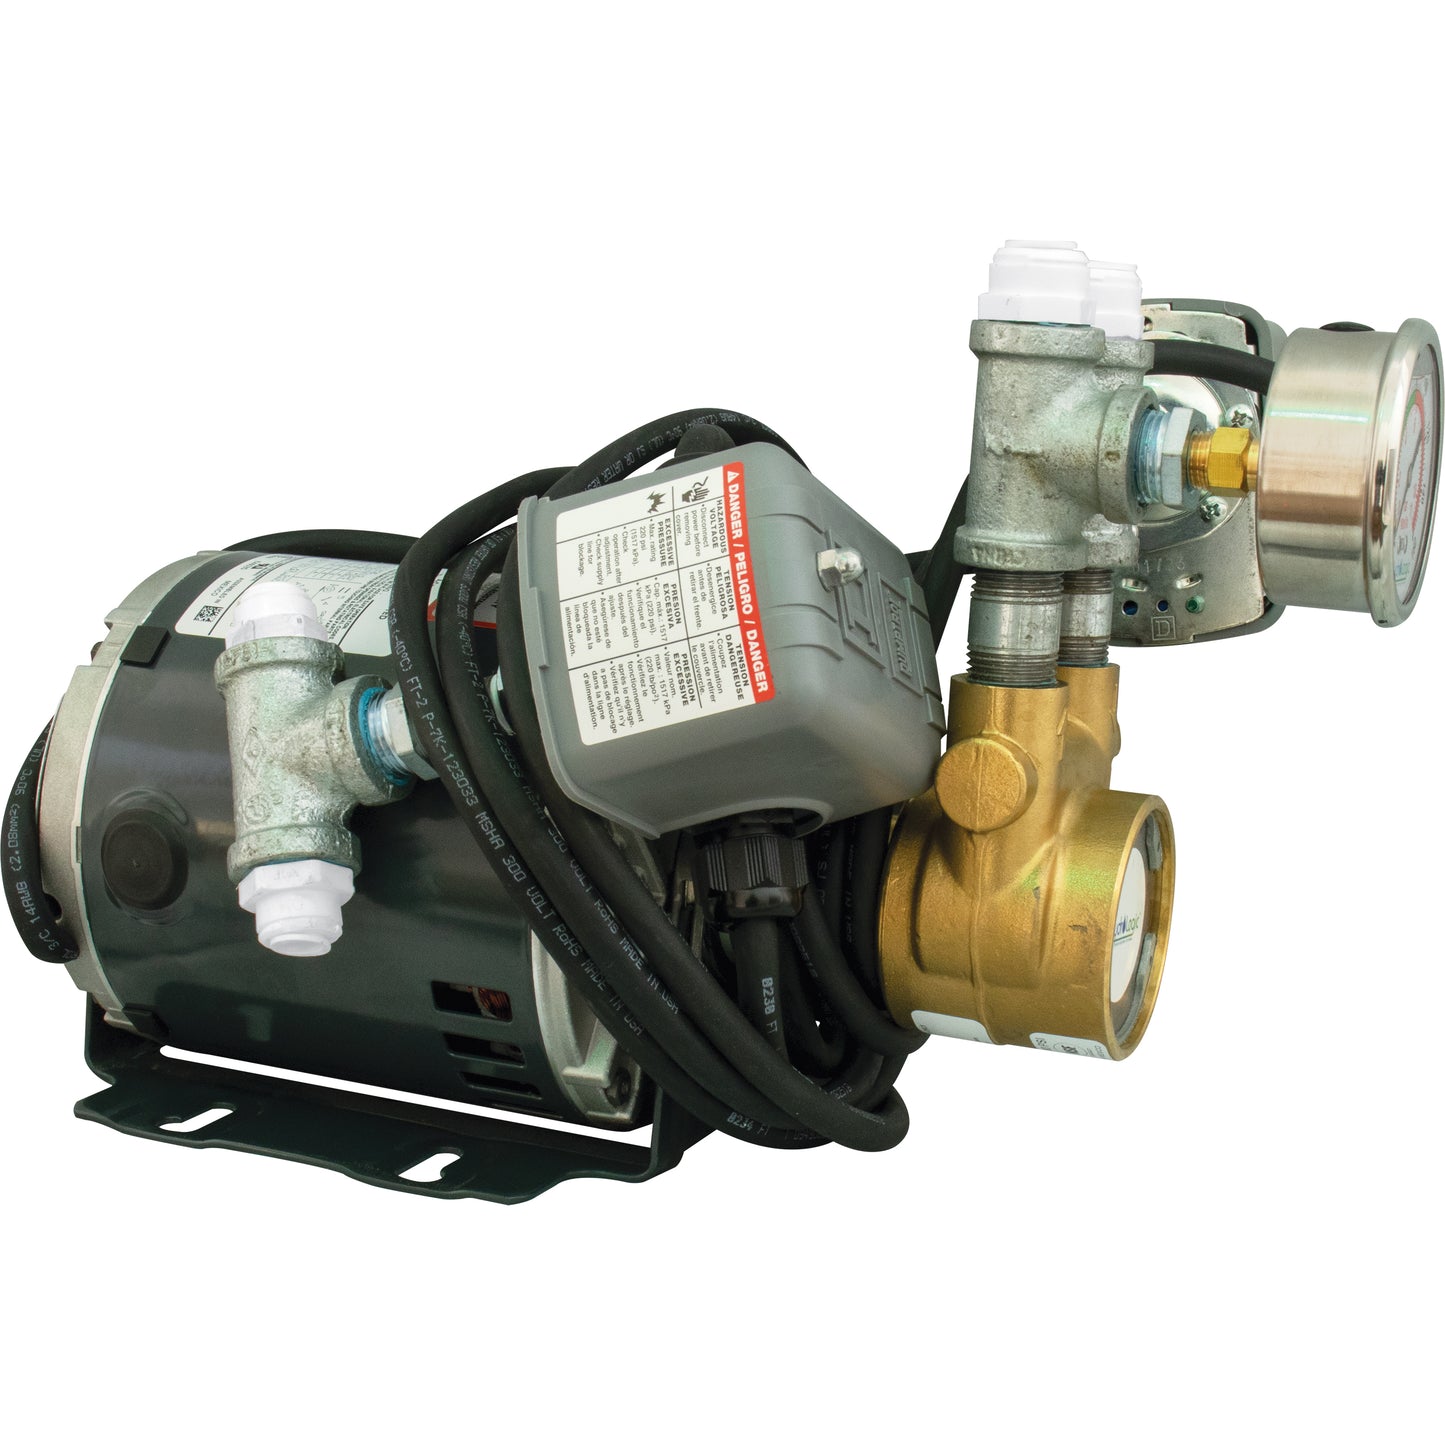 Hydro-Logic Pressure Booster Pump Evolution RO Continuous Use / Heavy Duty